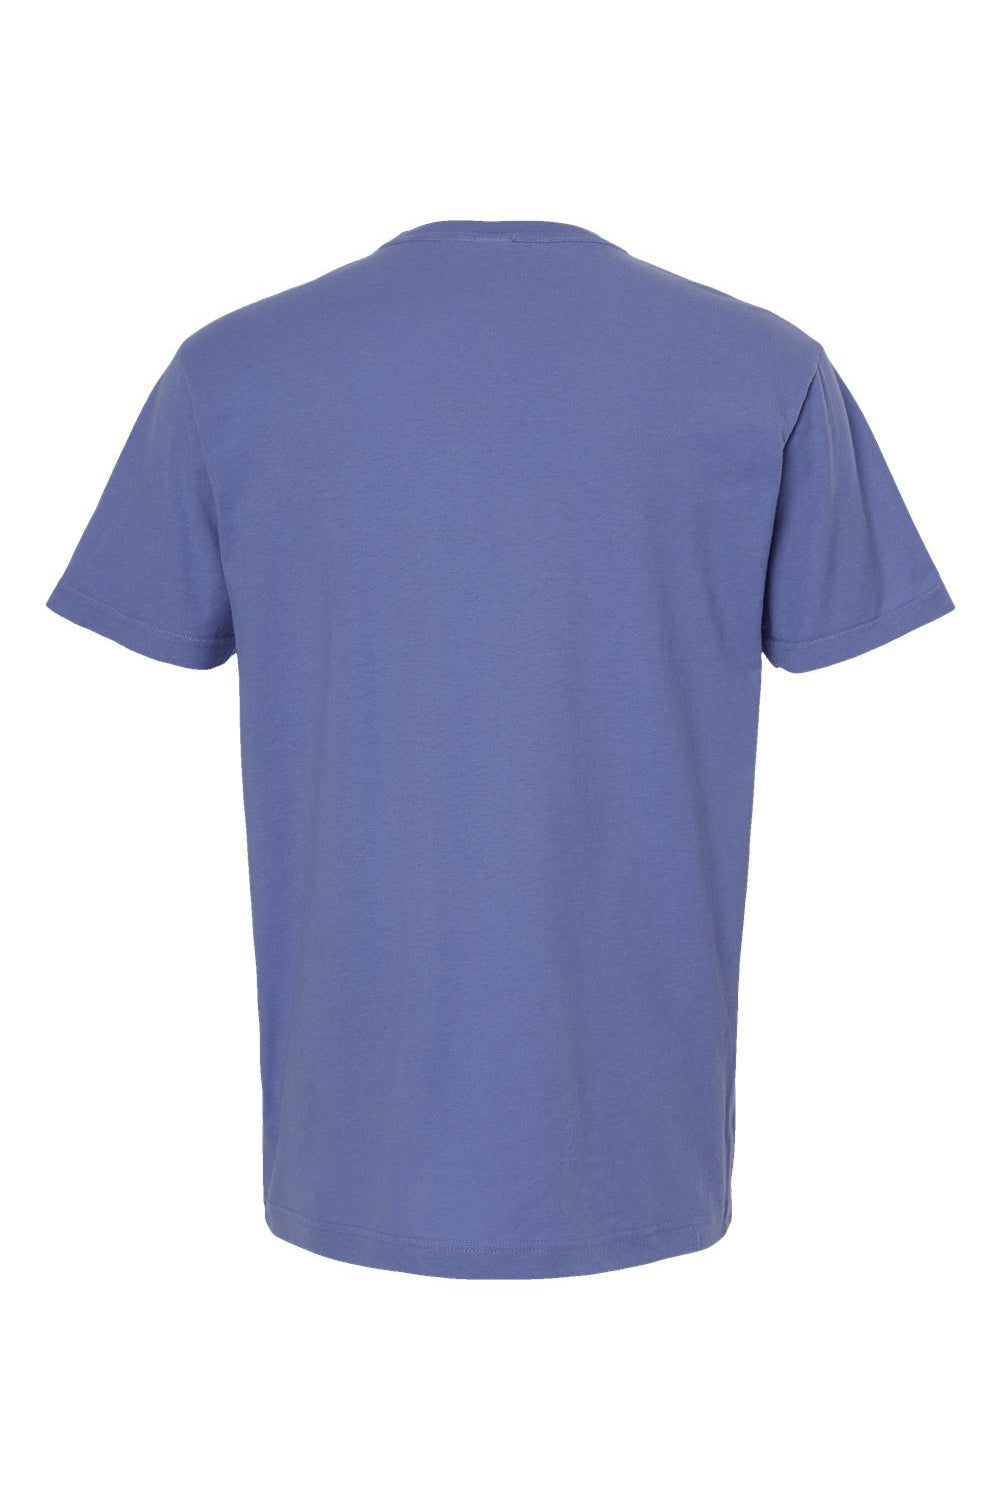 M&O 6500M Mens Vintage Garment Dyed Short Sleeve Crewneck T-Shirt Periwinkle Flat Back